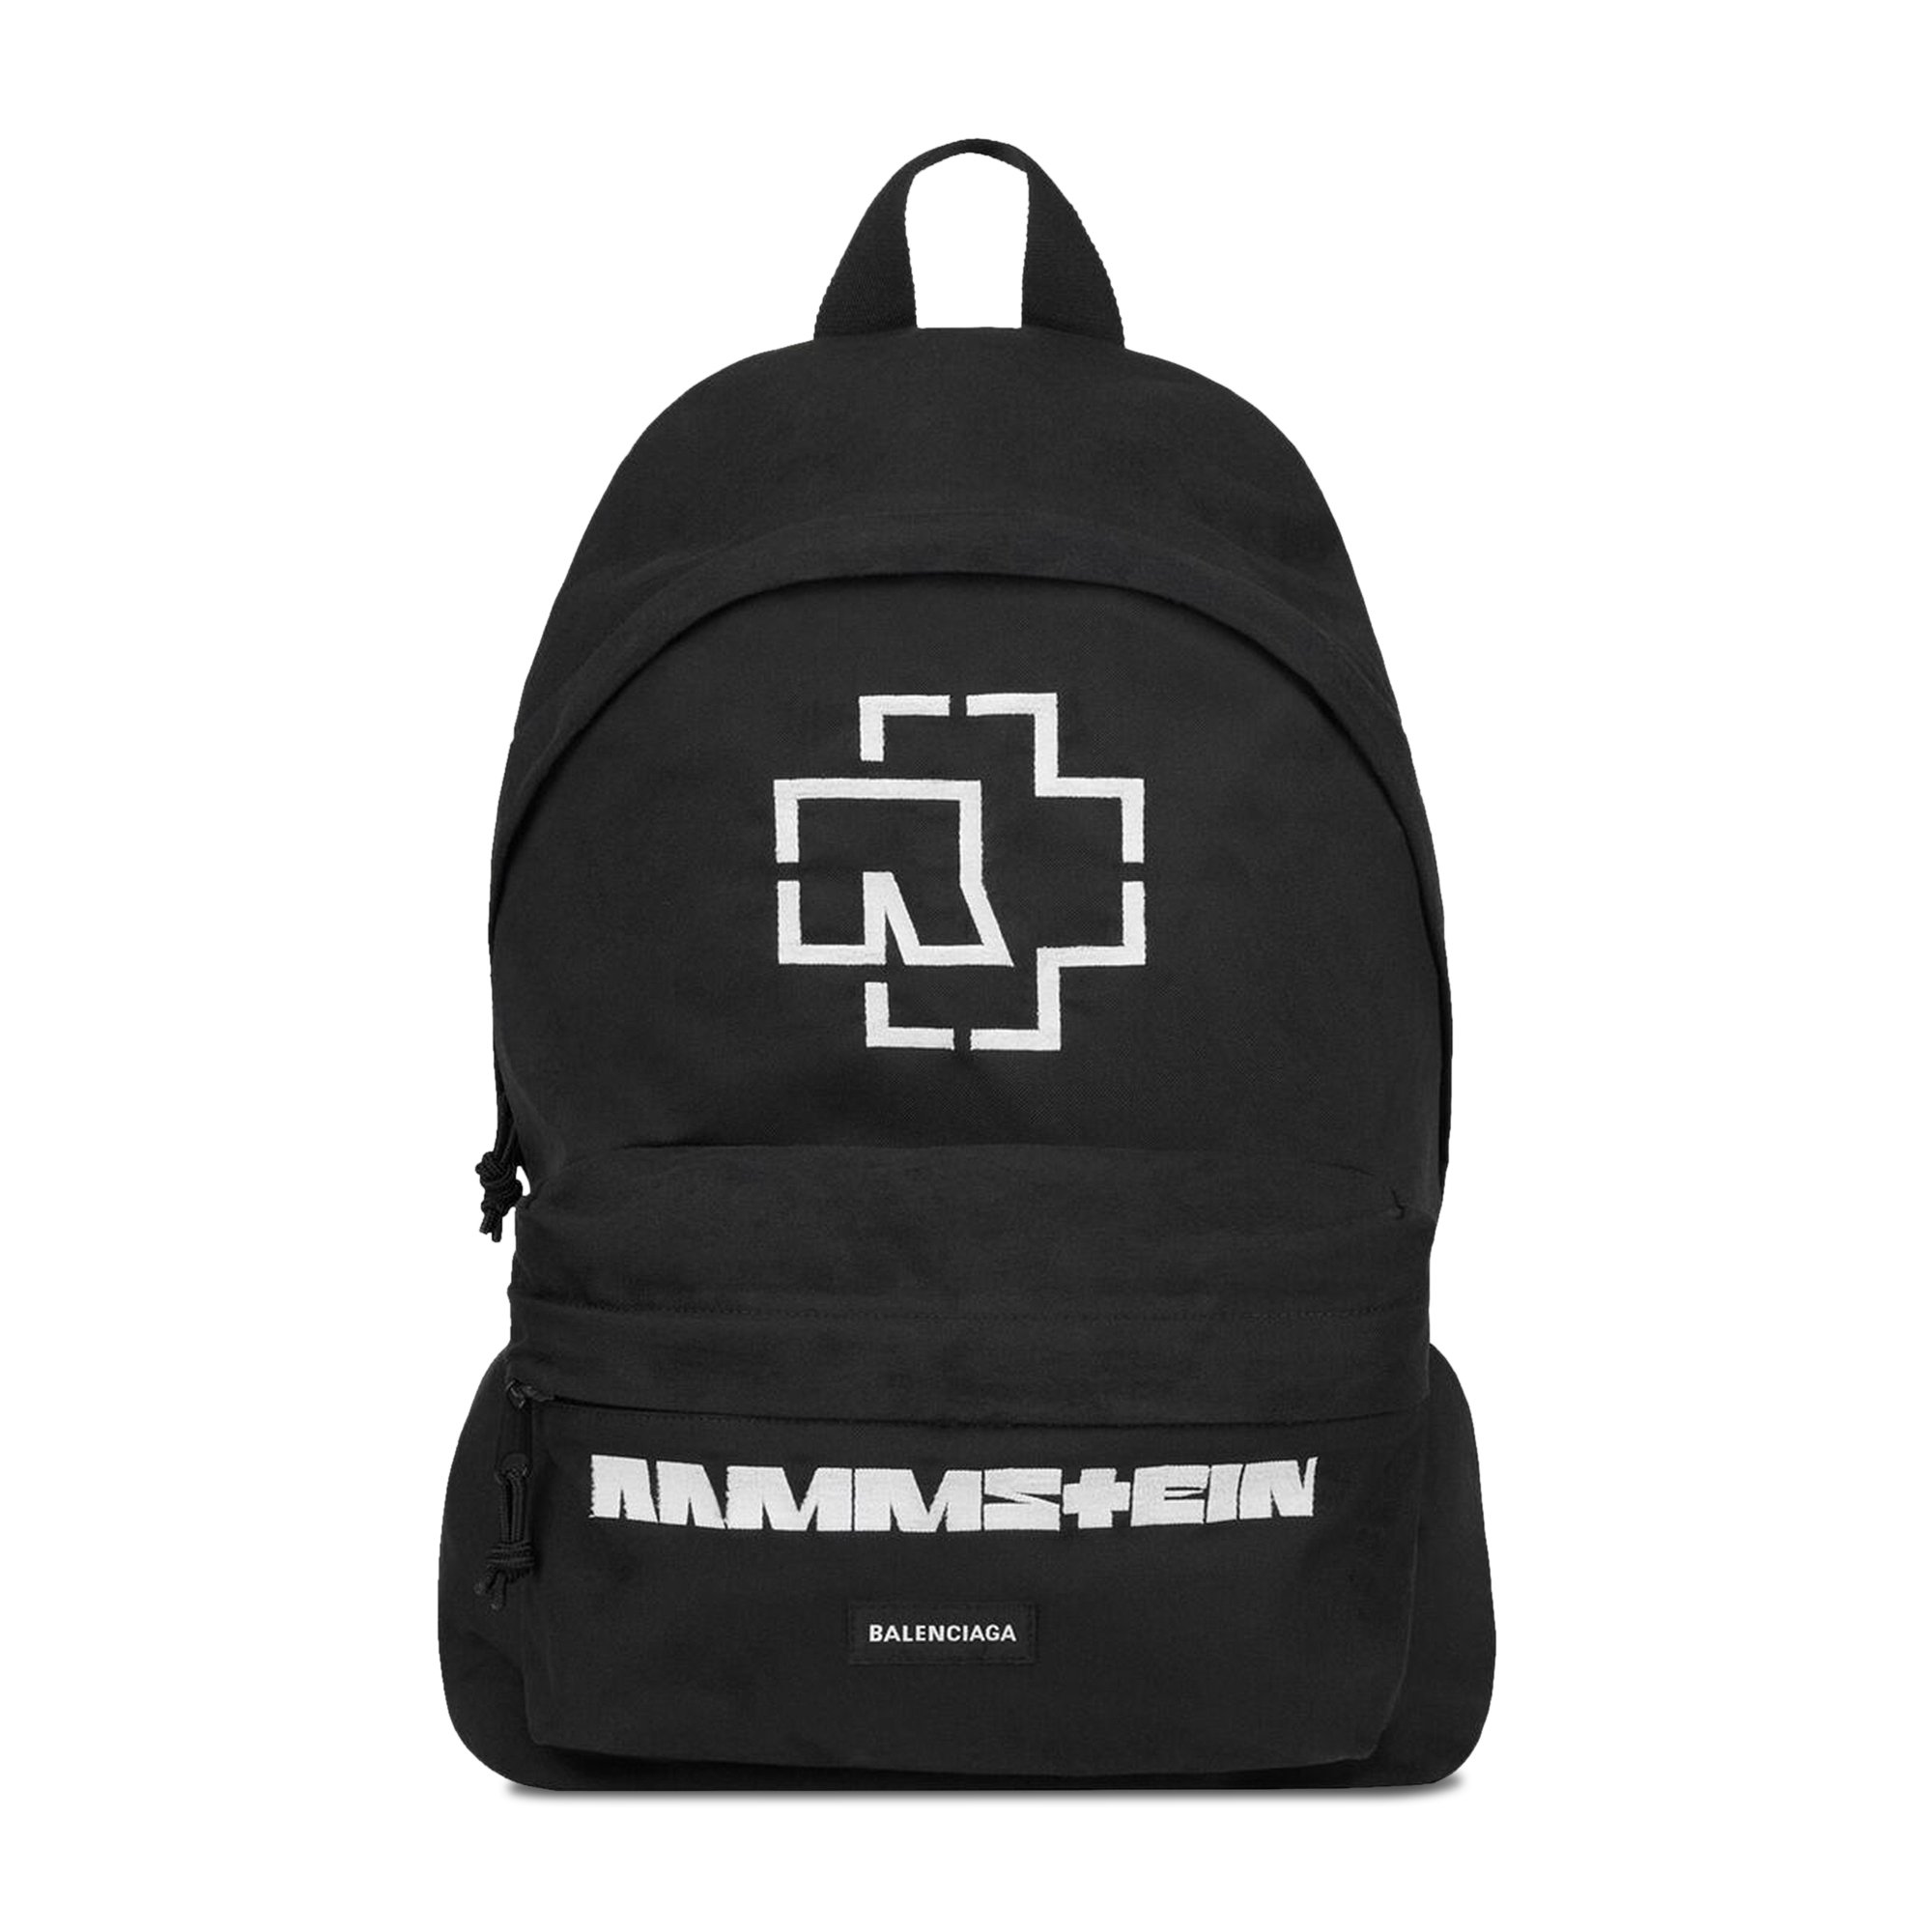 Balenciaga x Rammstein Backpack 'Black' | GOAT